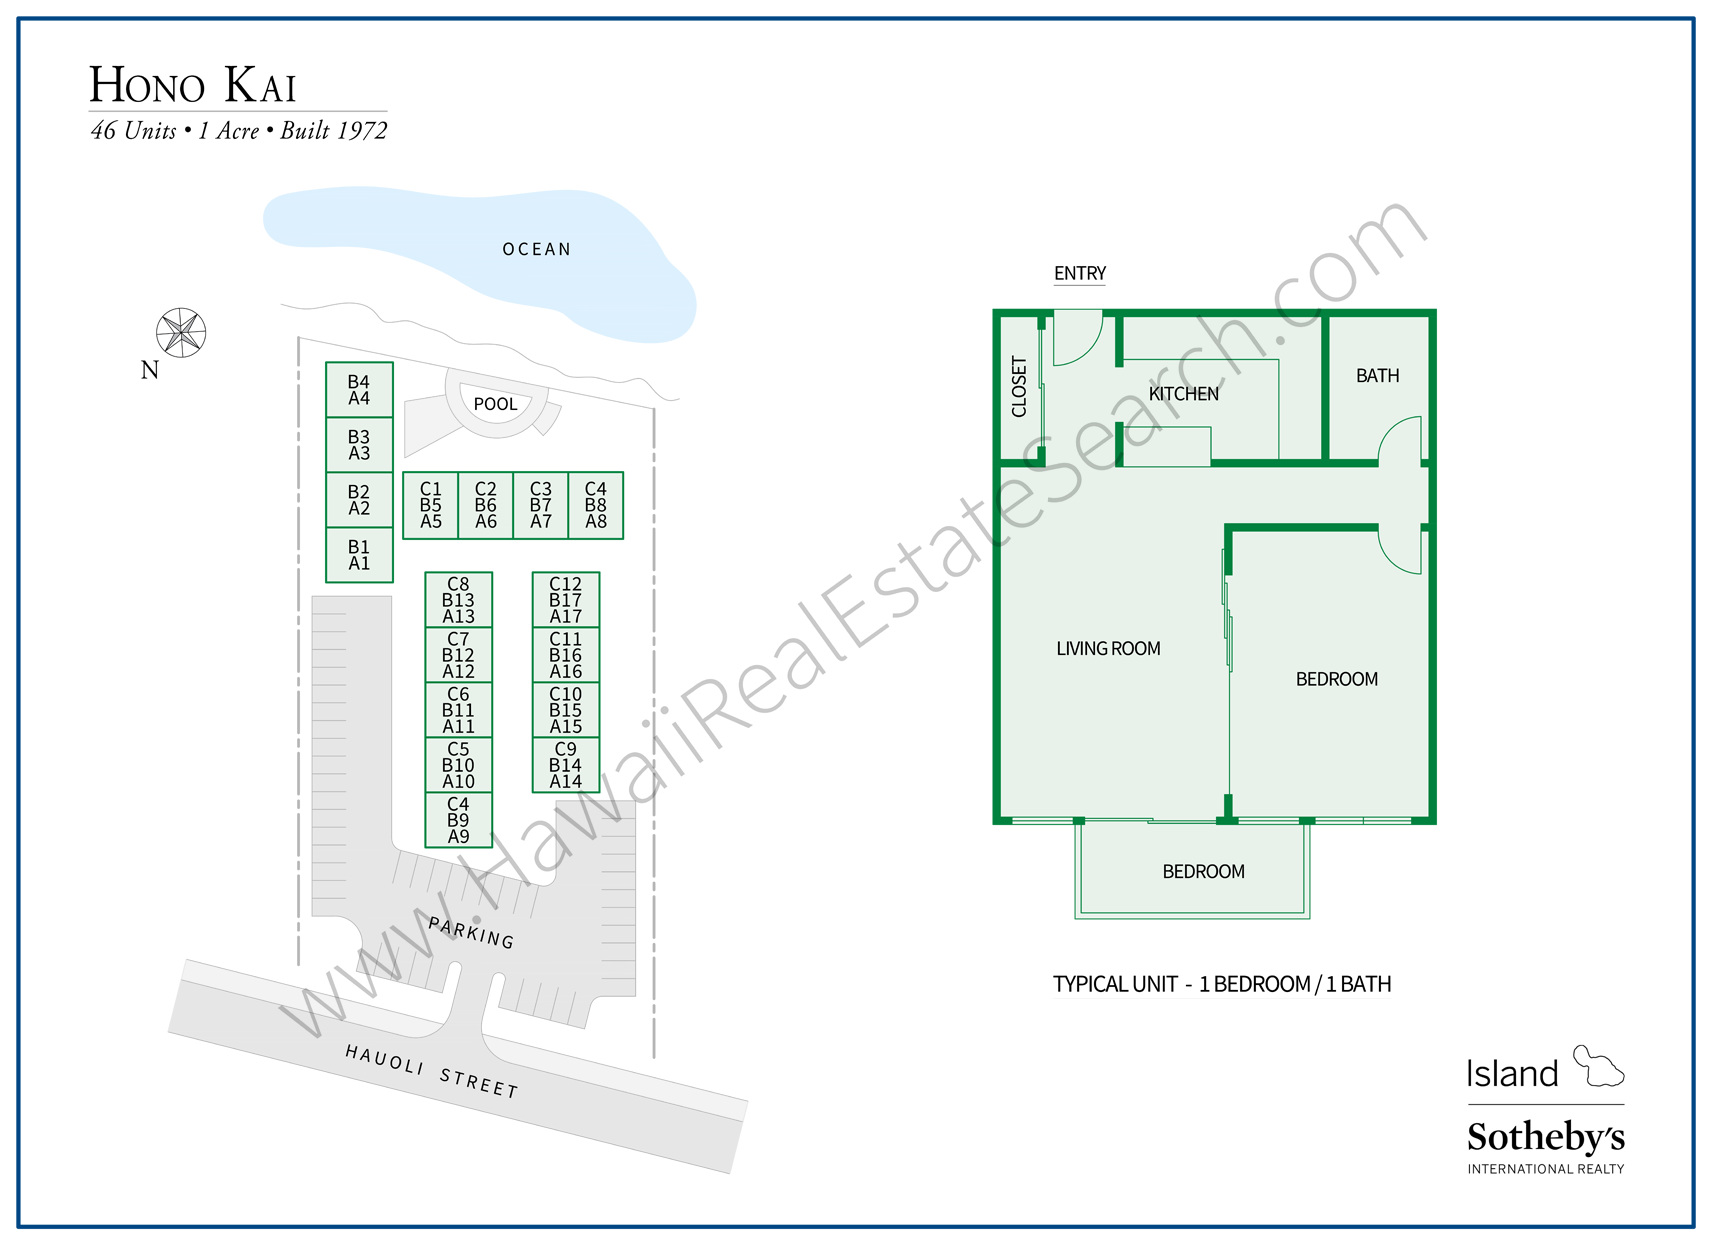 hono kai map and floor plan